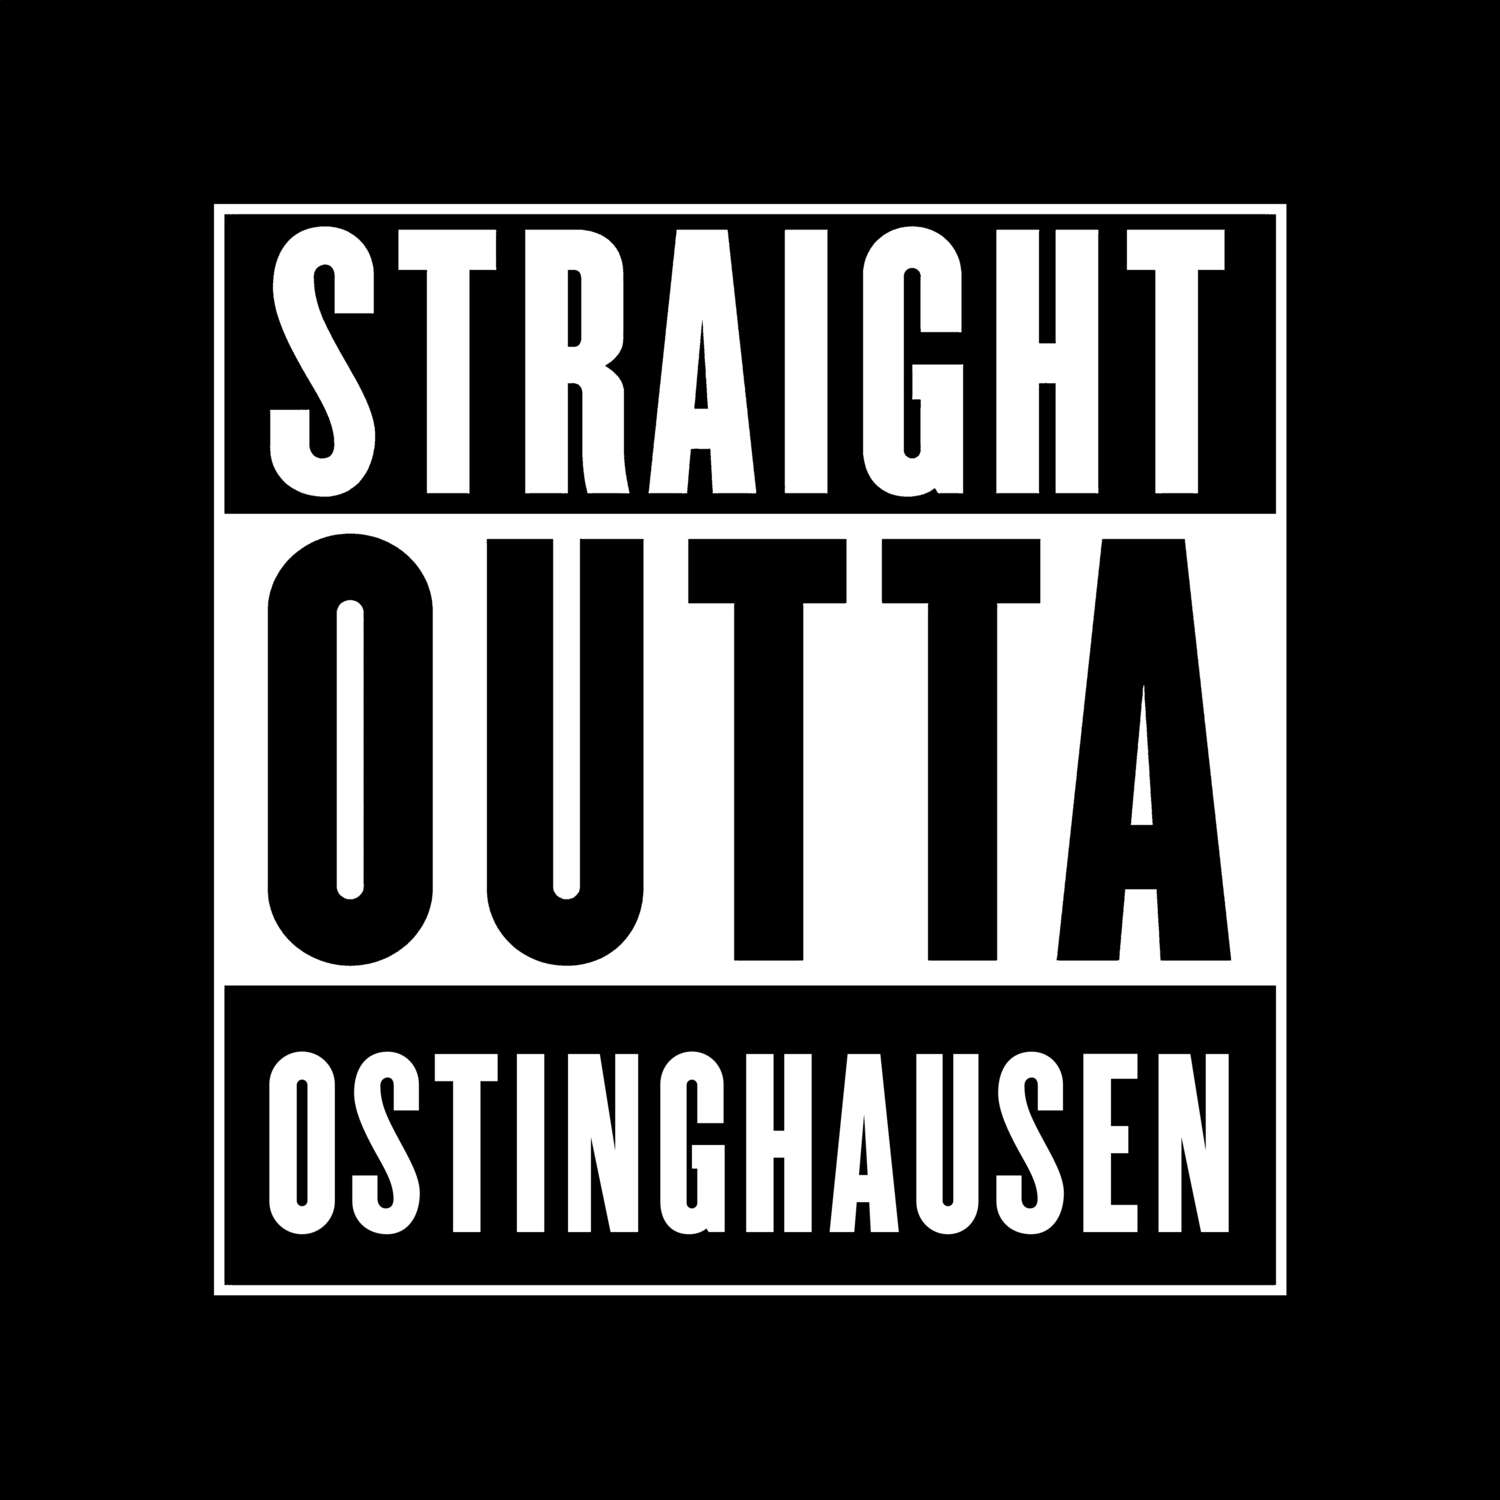 Ostinghausen T-Shirt »Straight Outta«